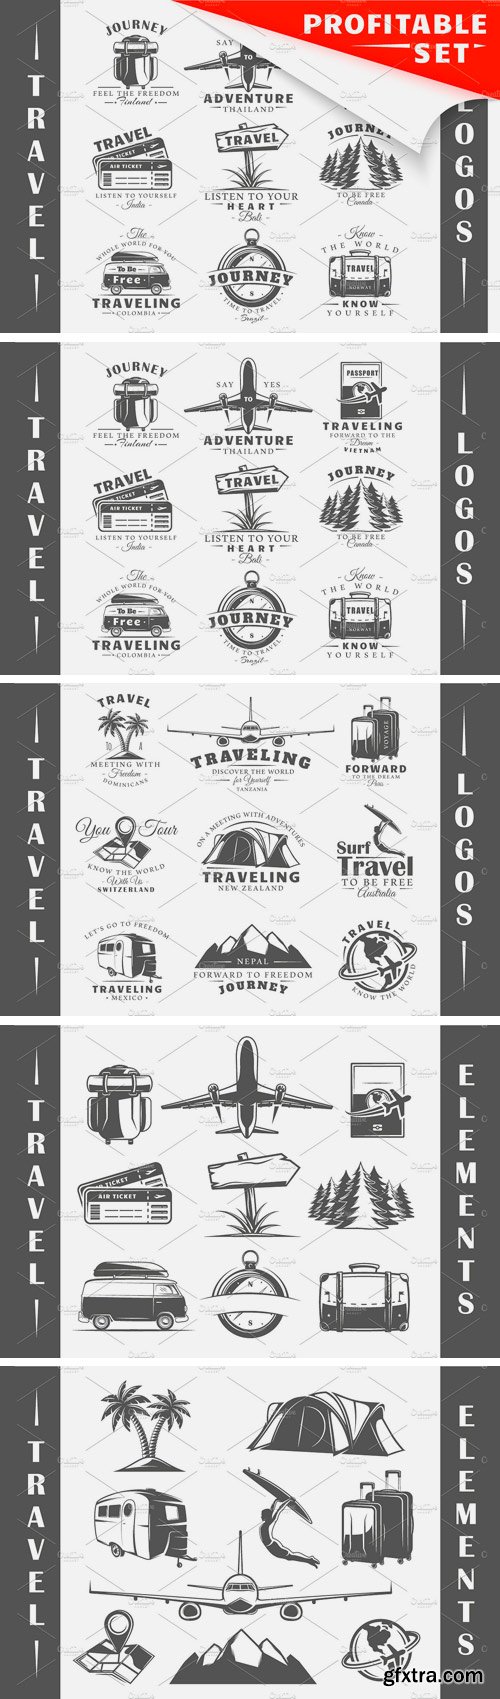 CM 1584206 - 18 Travel Logos Templates